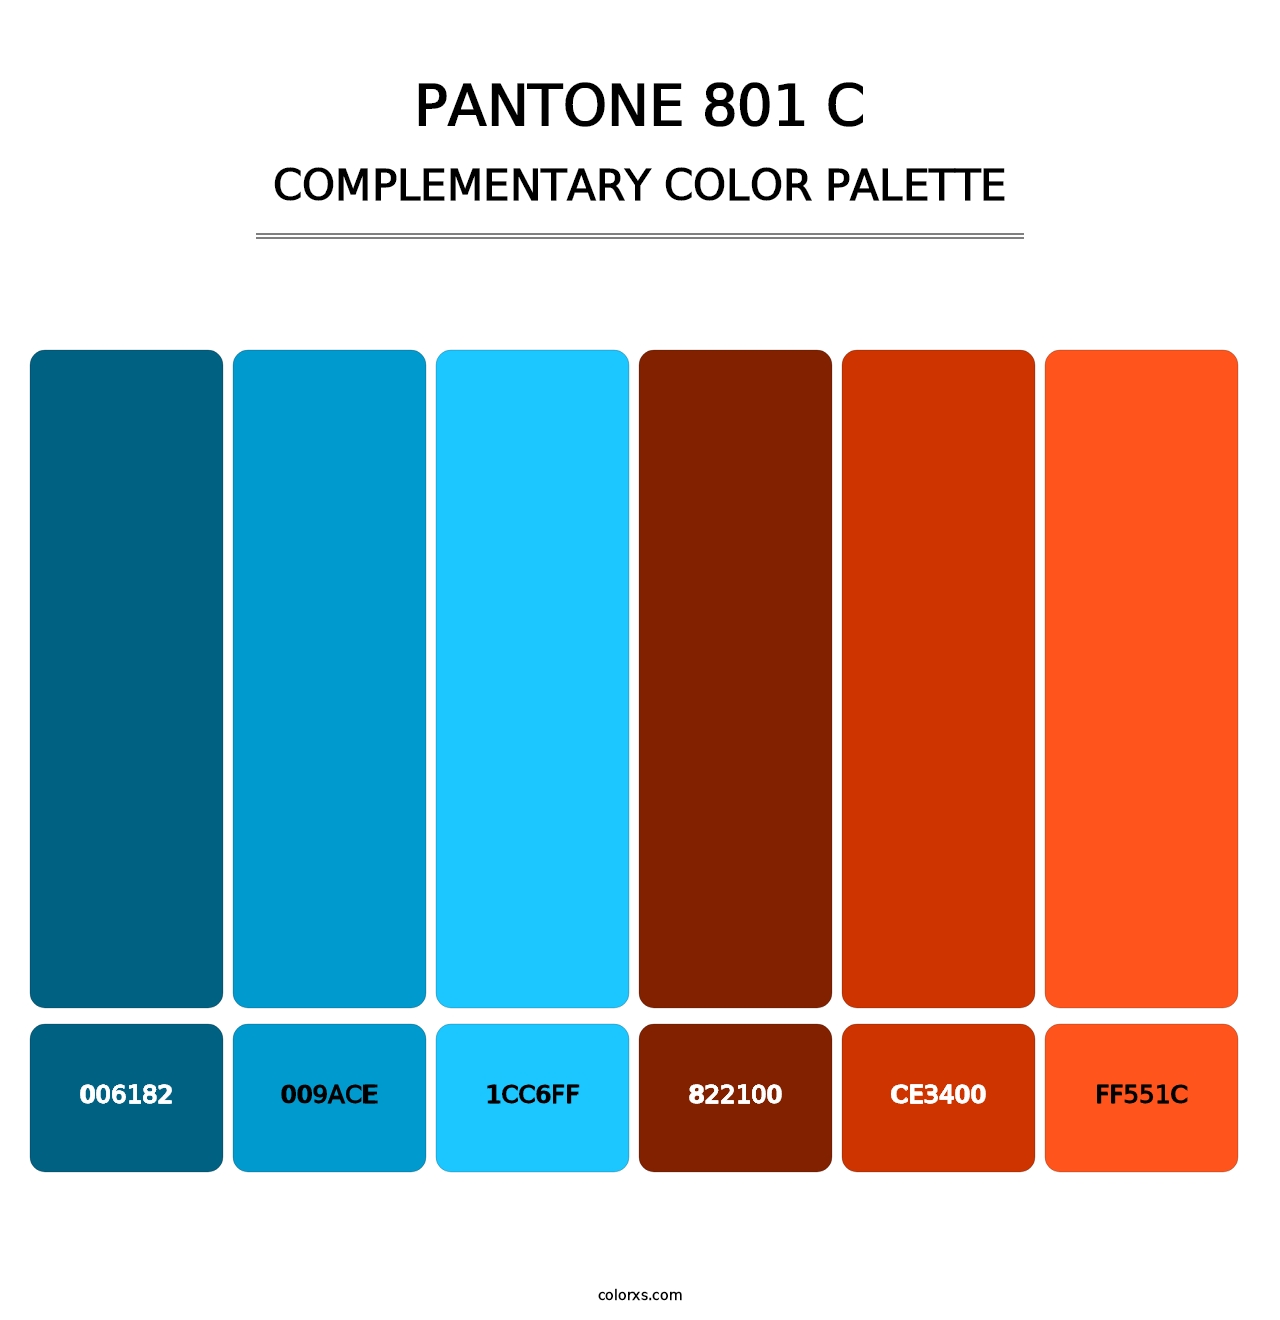 PANTONE 801 C - Complementary Color Palette